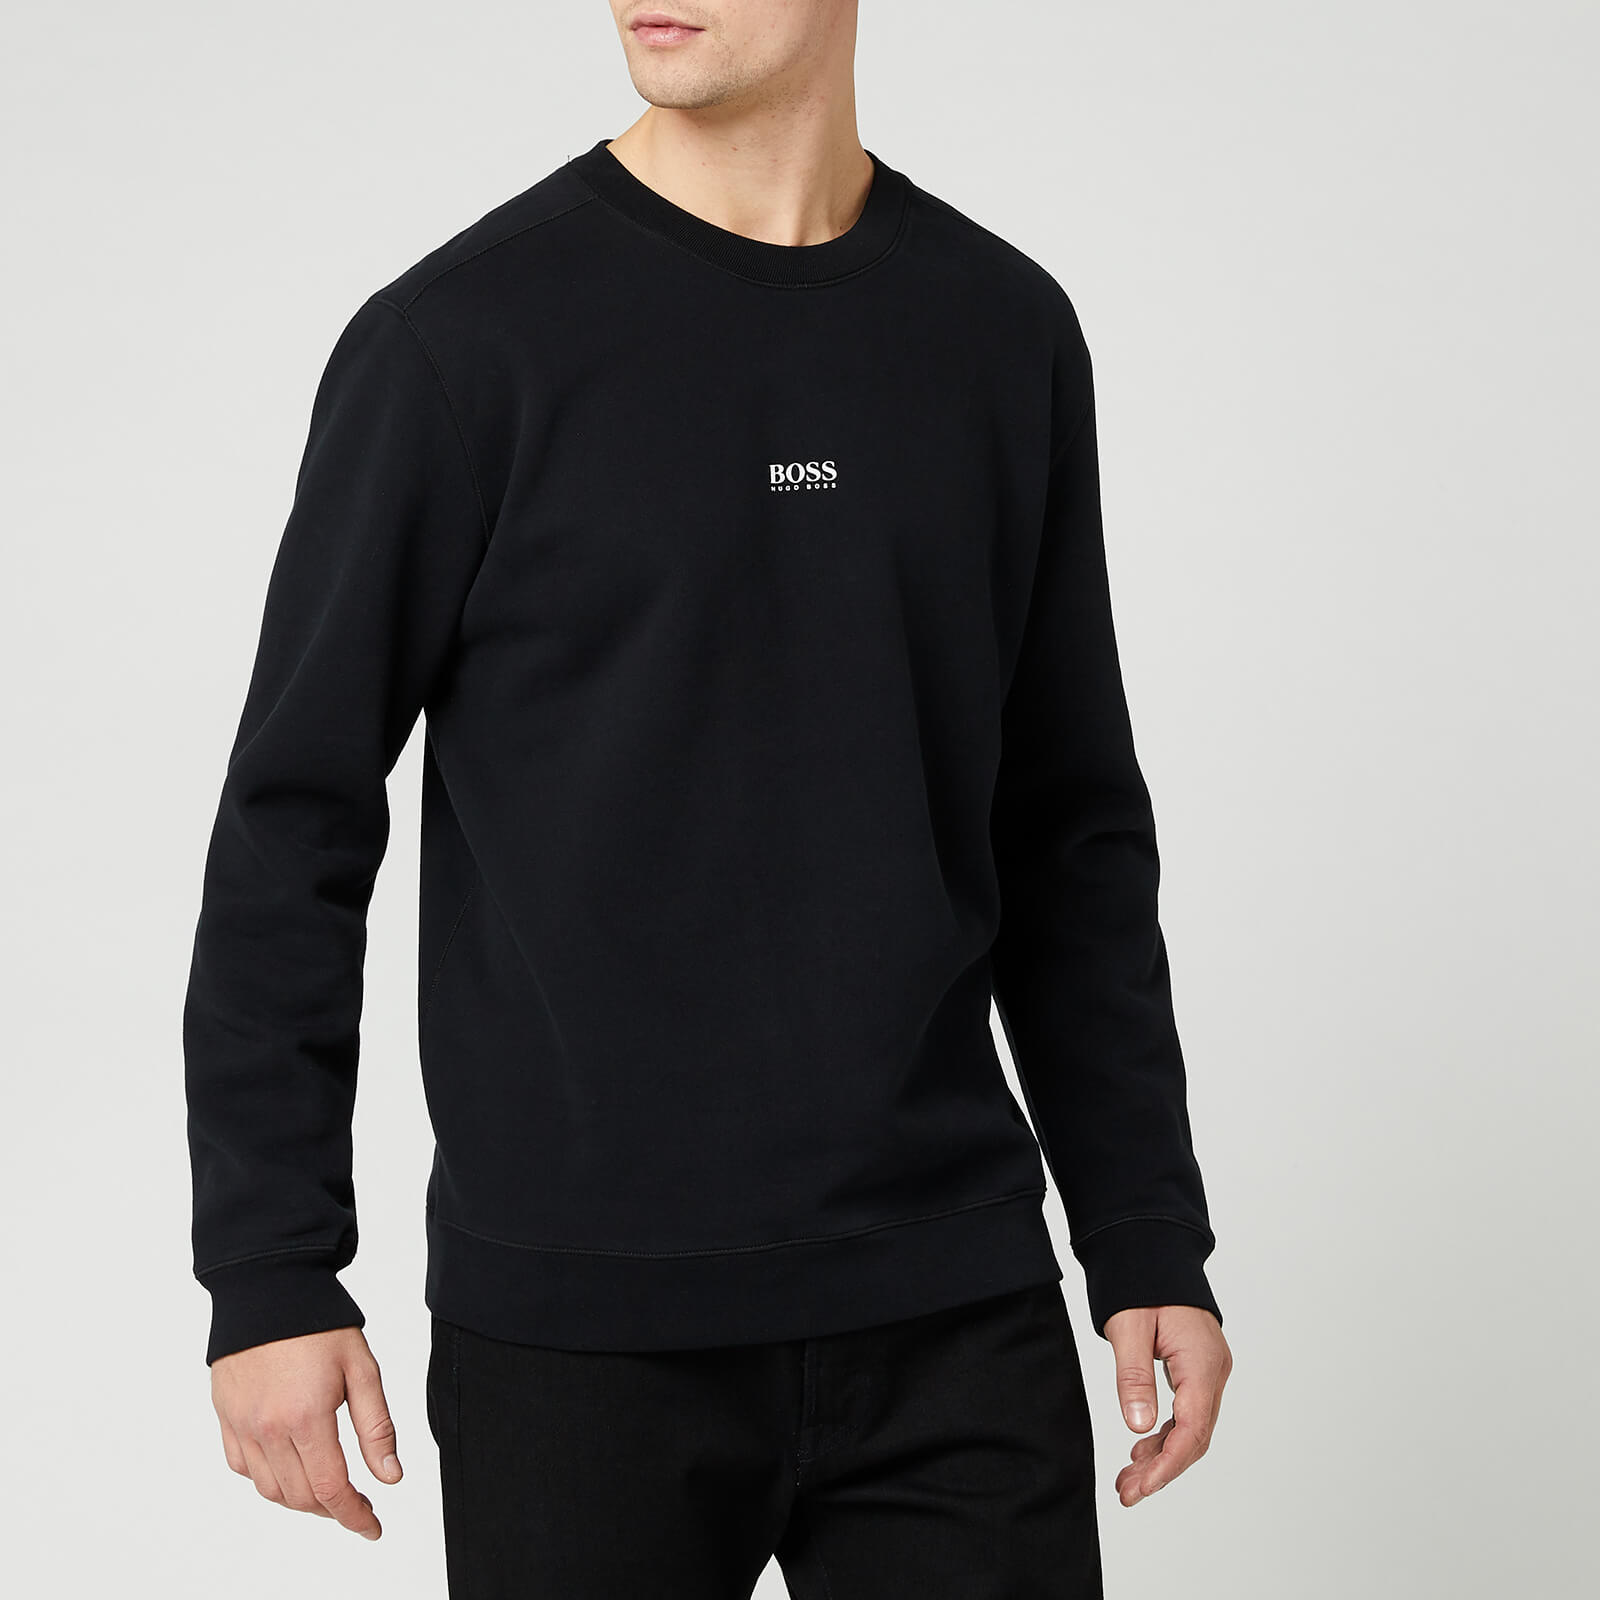 BOSS Casual Men's Weevo Relaxed Fit Sweatshirt - Black - M